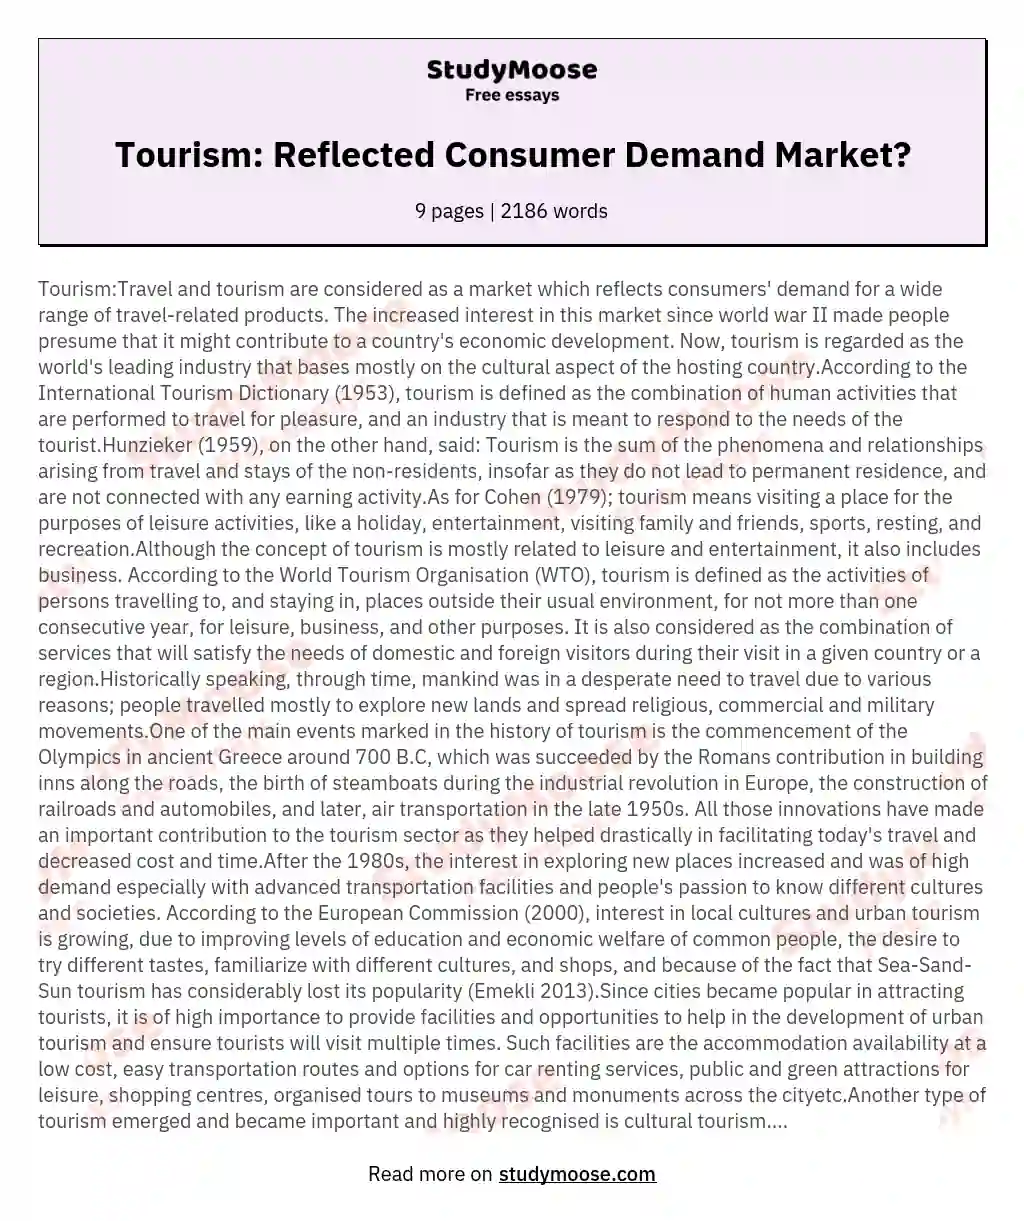 Tourism: Reflected Consumer Demand Market?